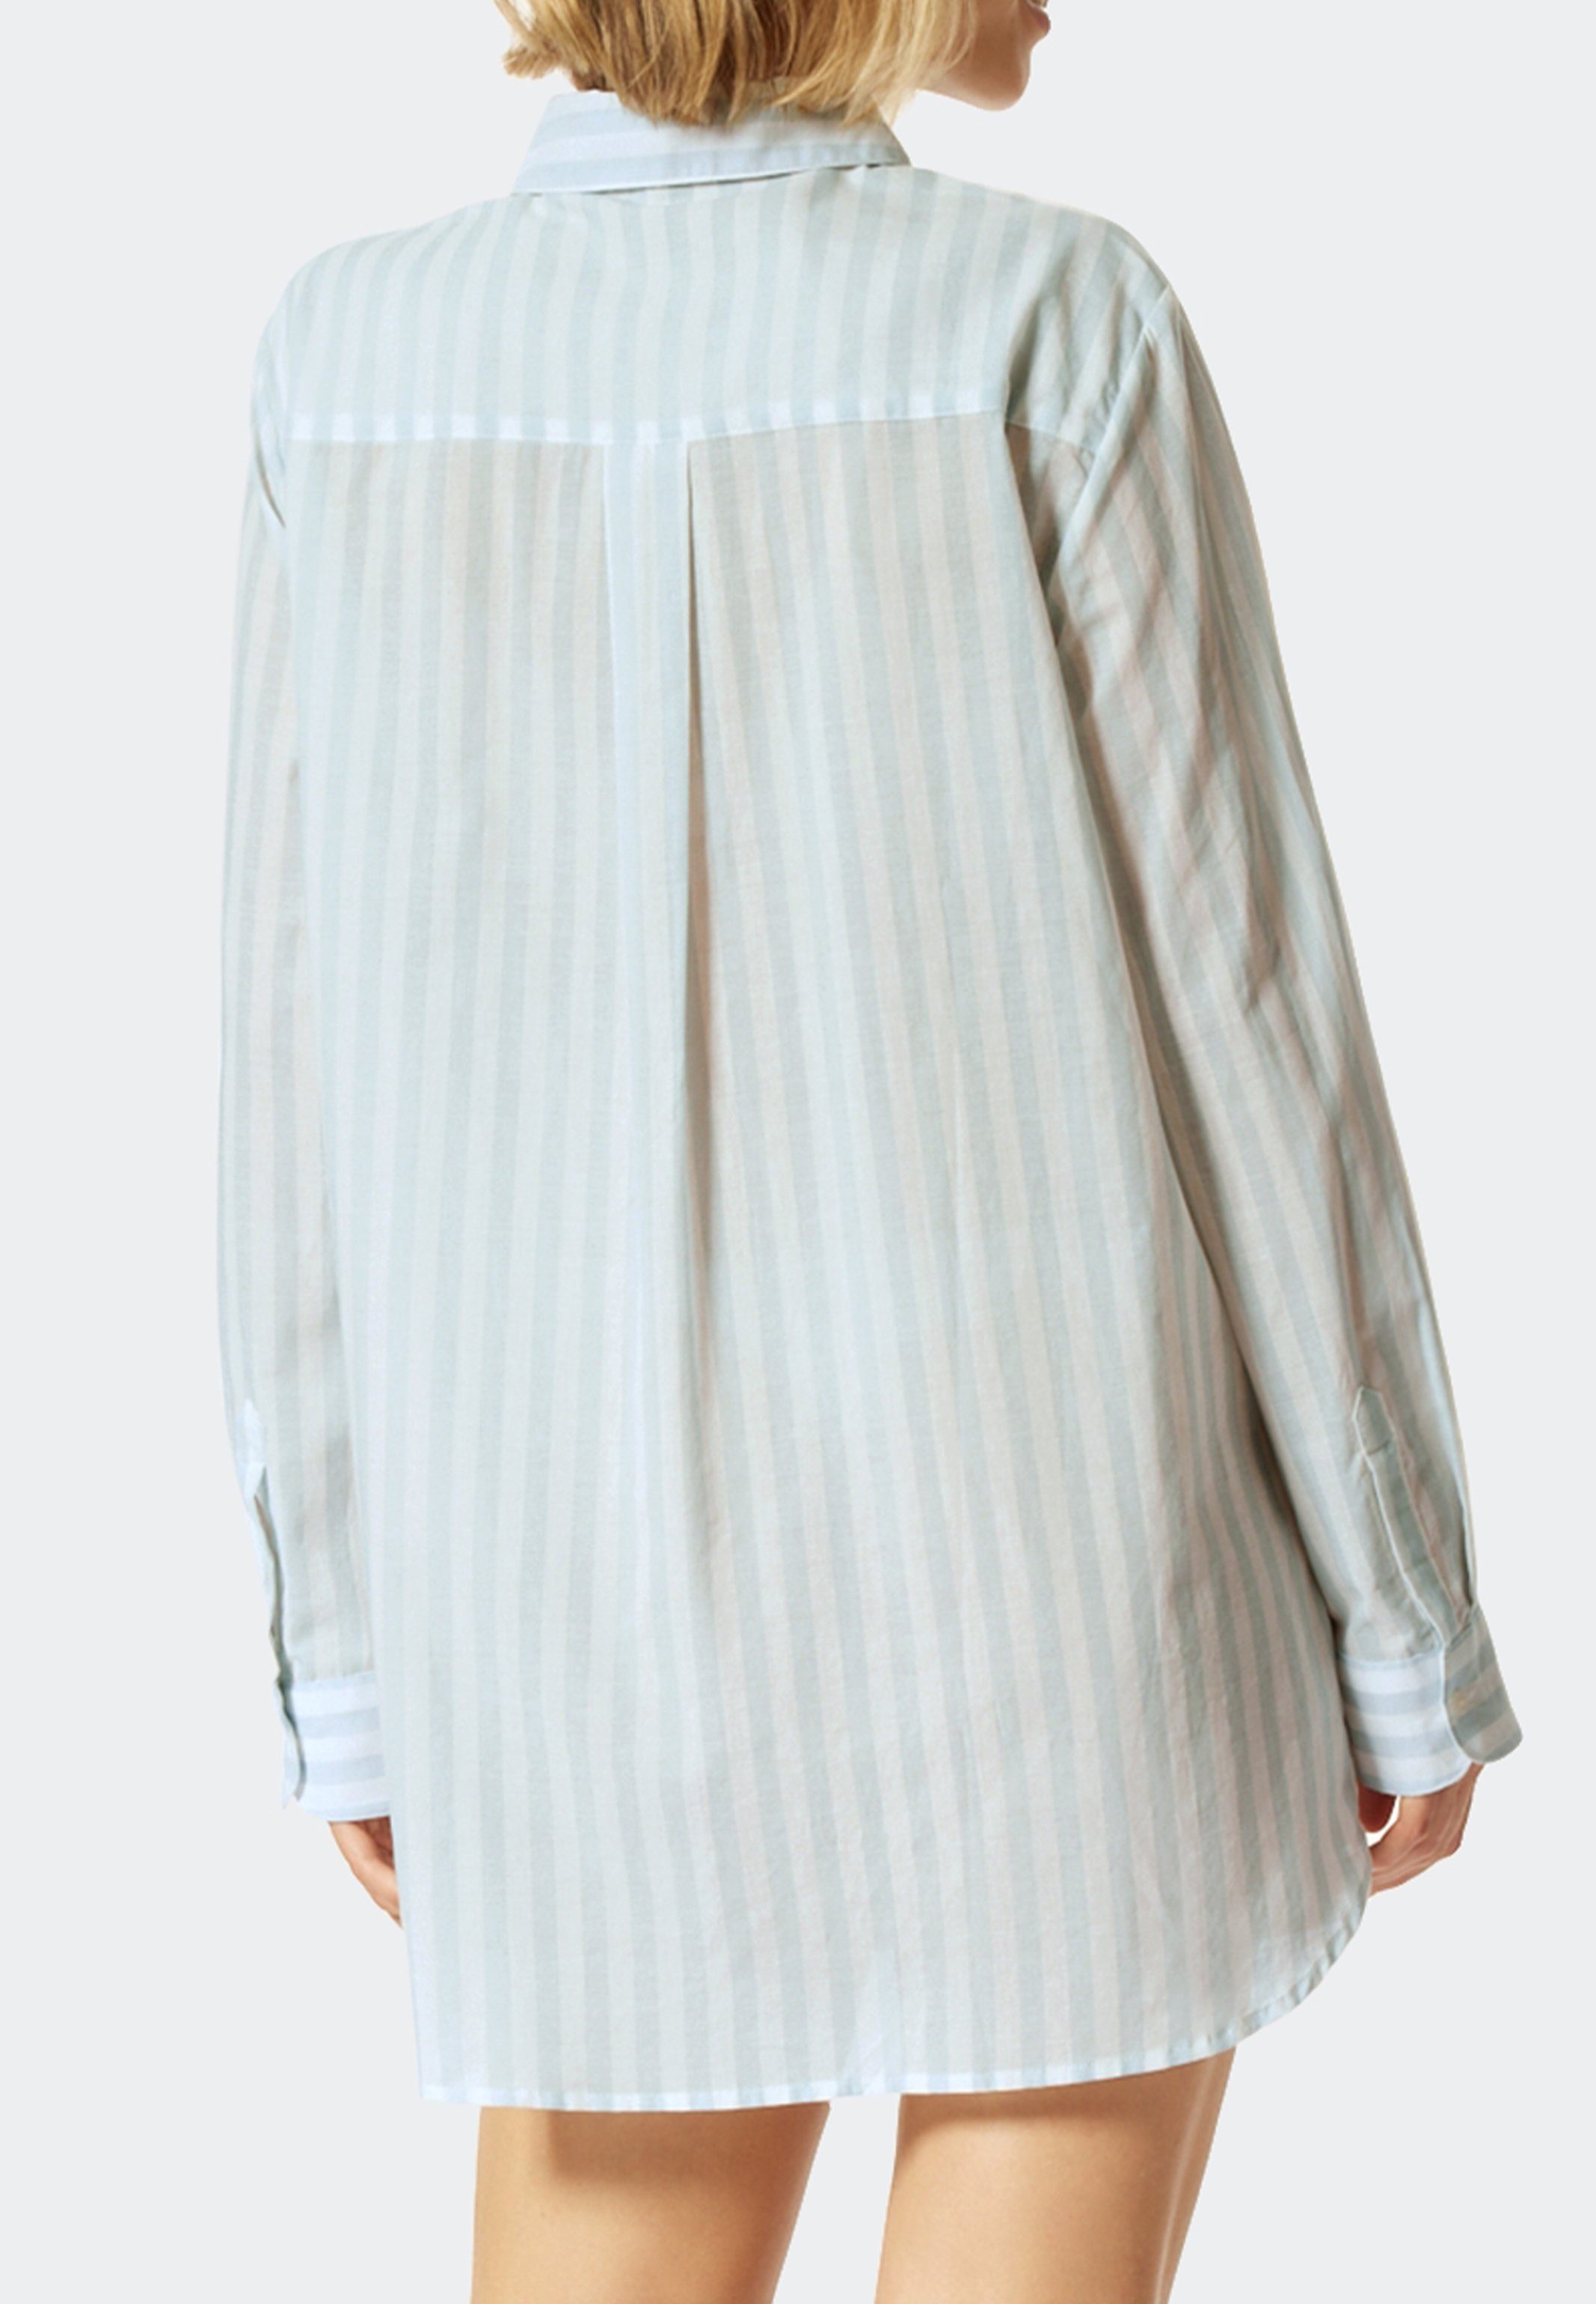 (1-tlg) - Story Hellblau Baumwolle Nachthemd Nachthemd Schiesser Pyjama -